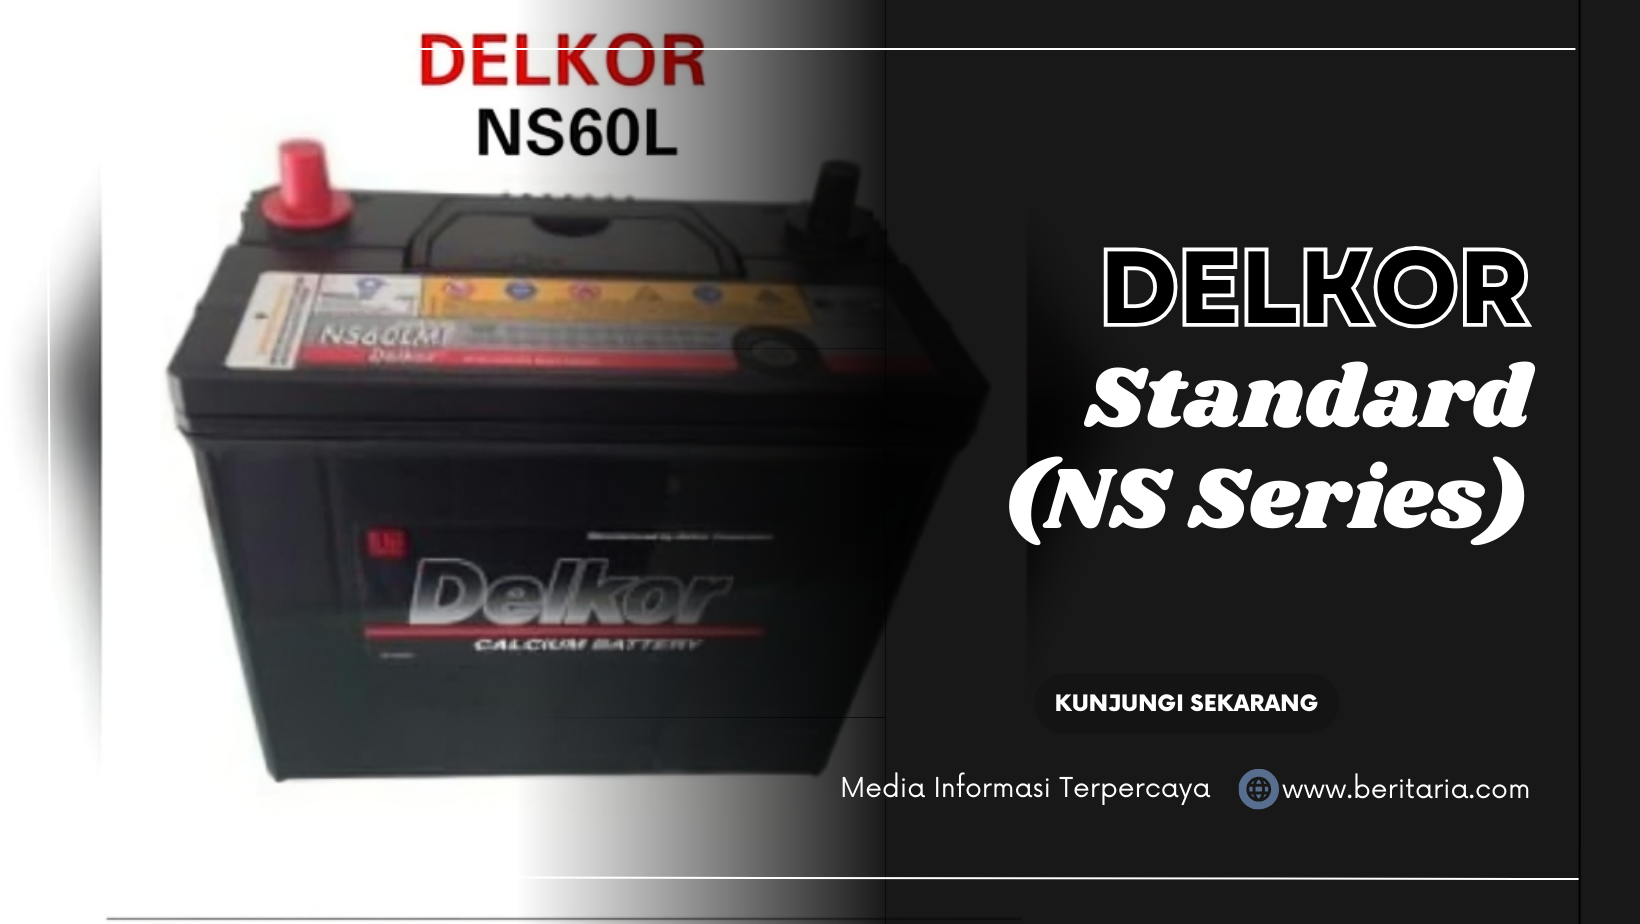 Beritaria.com | Delkor Standard (NS Series)